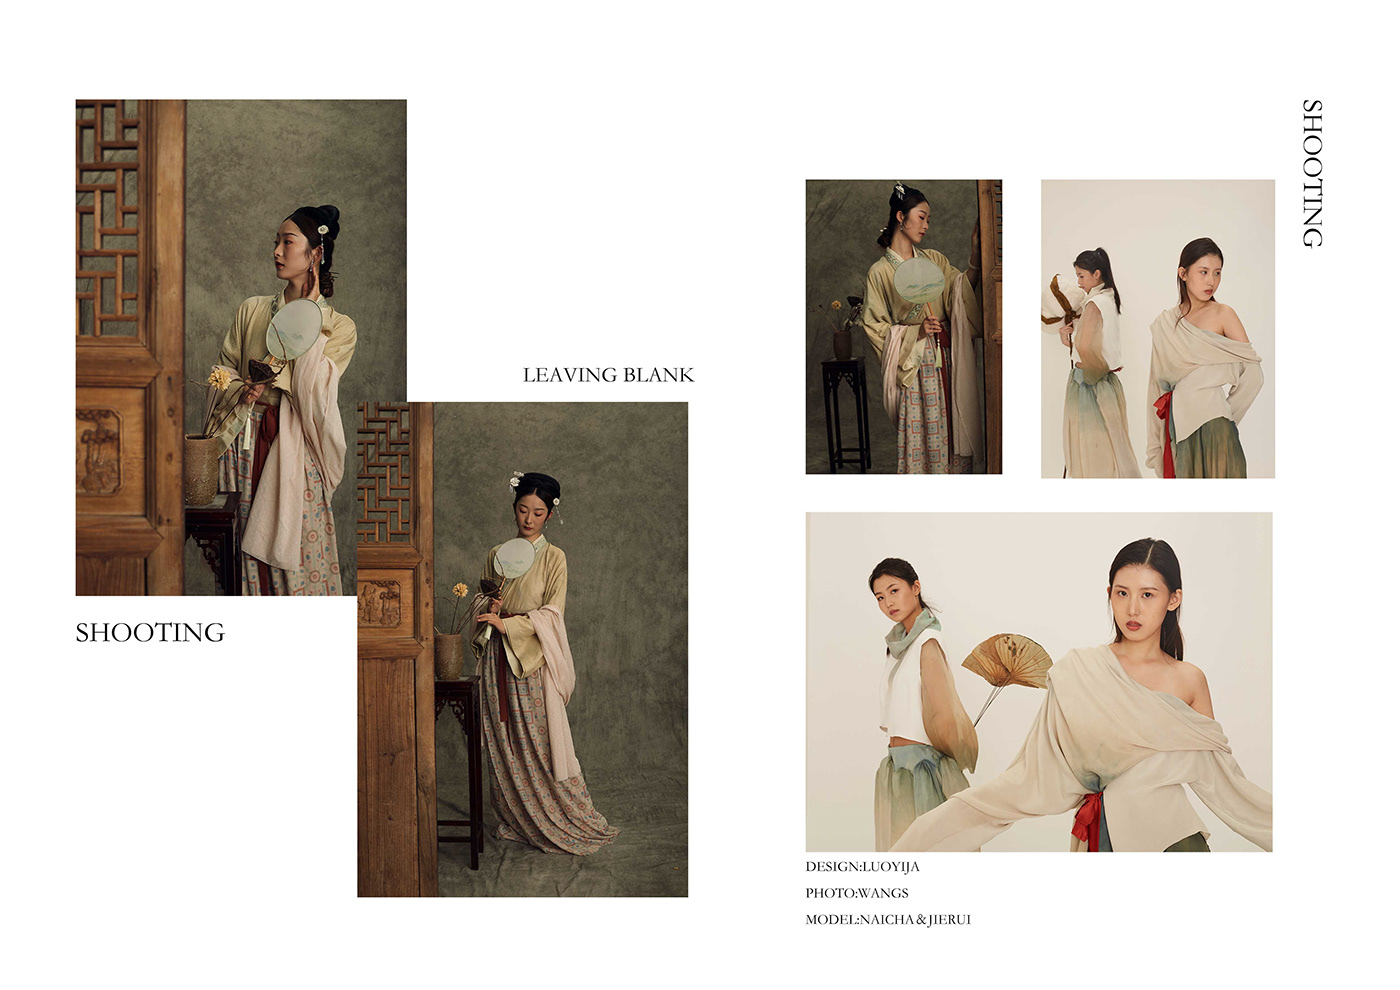 服装设计 时尚 摄影 fashion design 时尚造型 中国风   服装